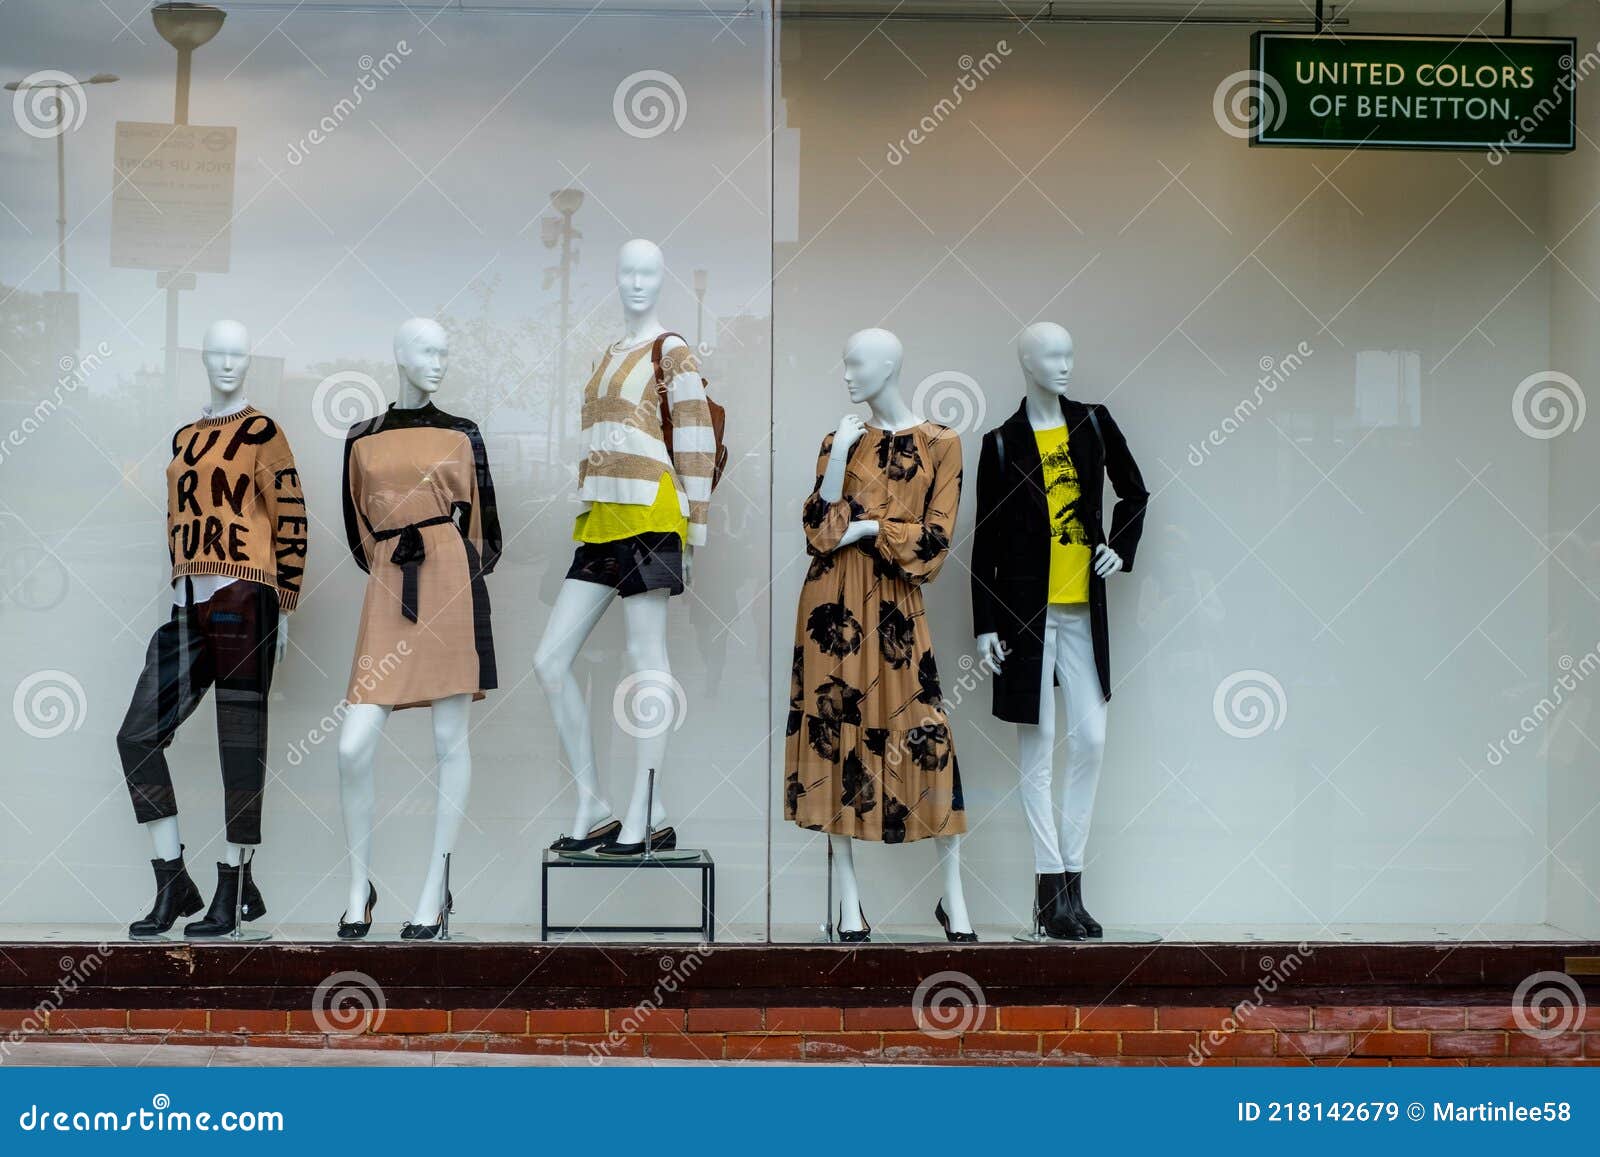 United Colors of Benetton Shop Window Fashion Maniquí Display Imagen de archivo editorial Imagen de recorrido, calle: 218142679